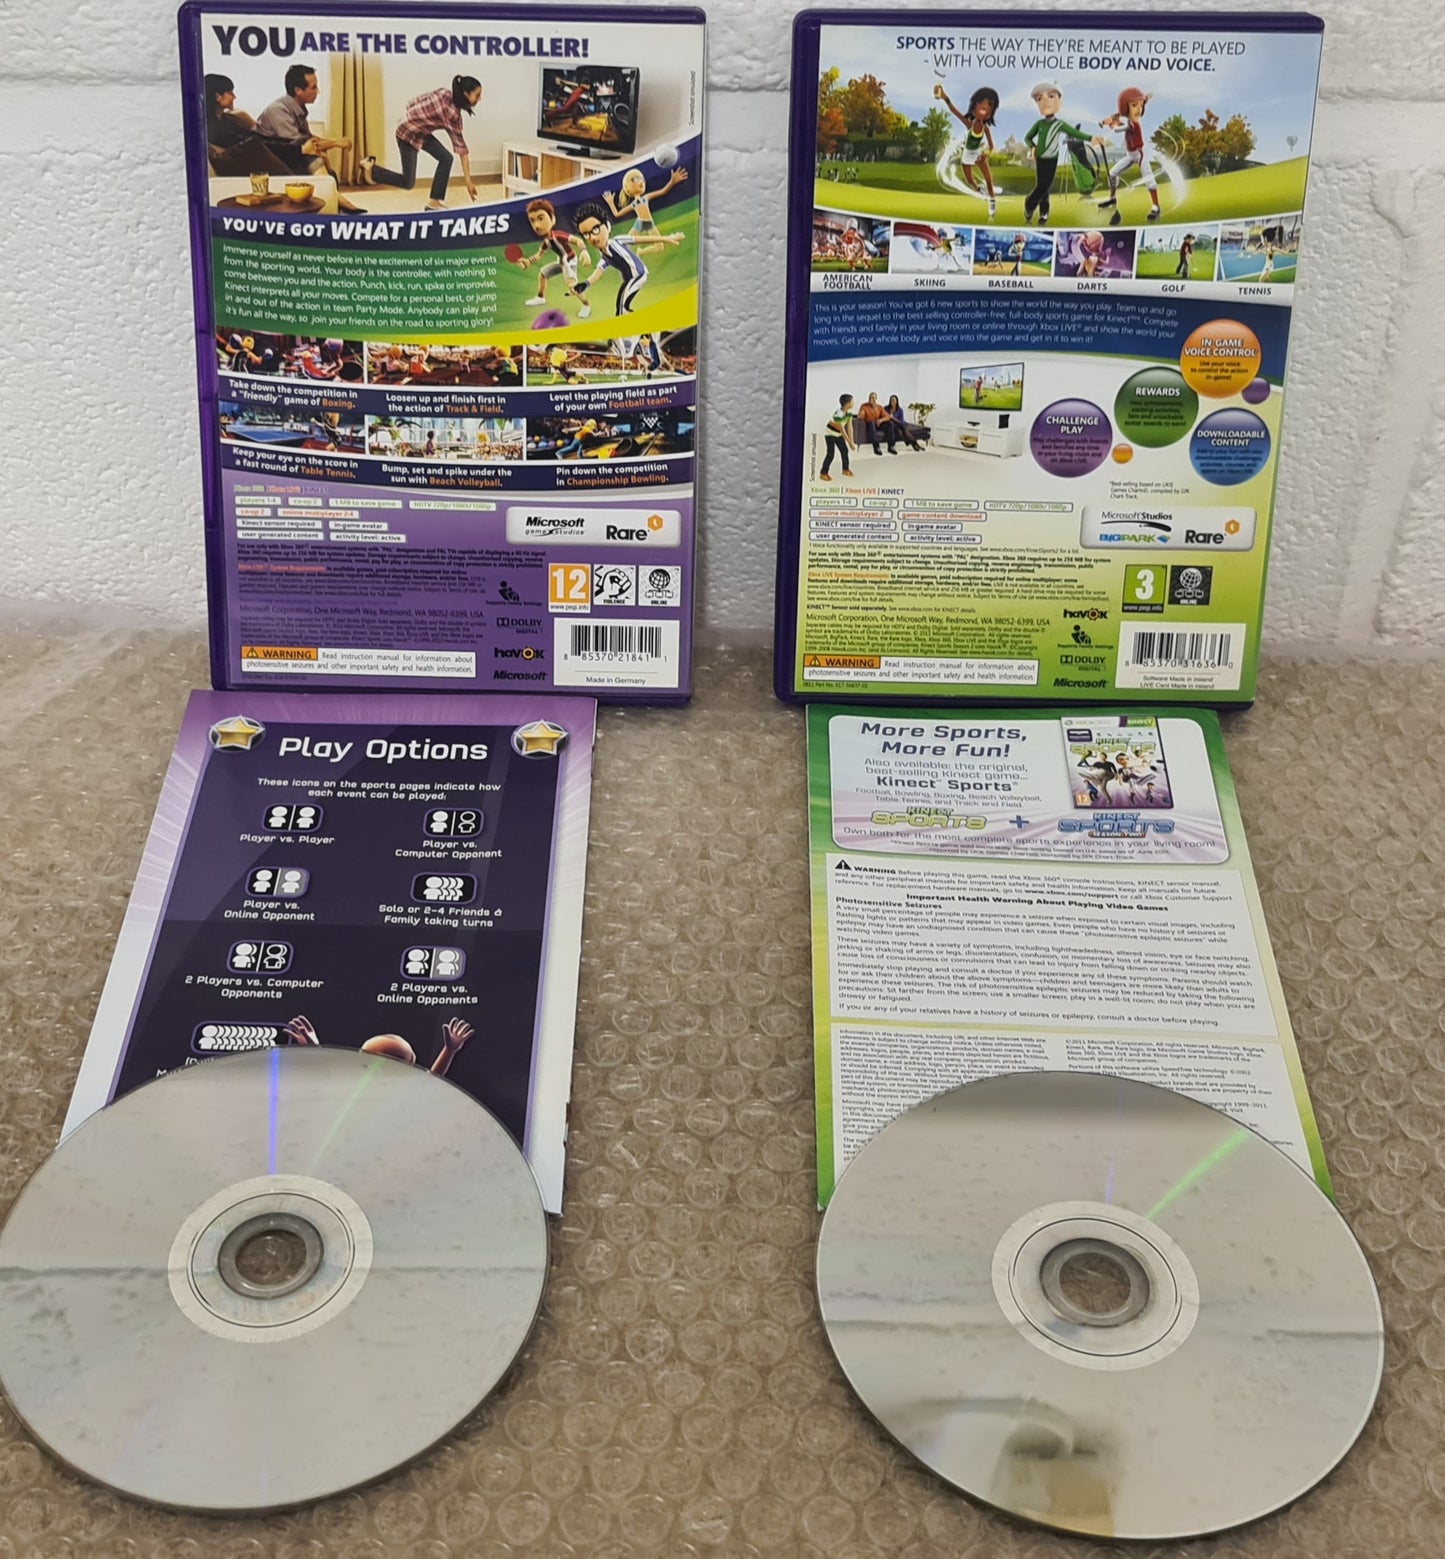 Kinect Sports 1 & 2 Microsoft Xbox 360 Game Bundle